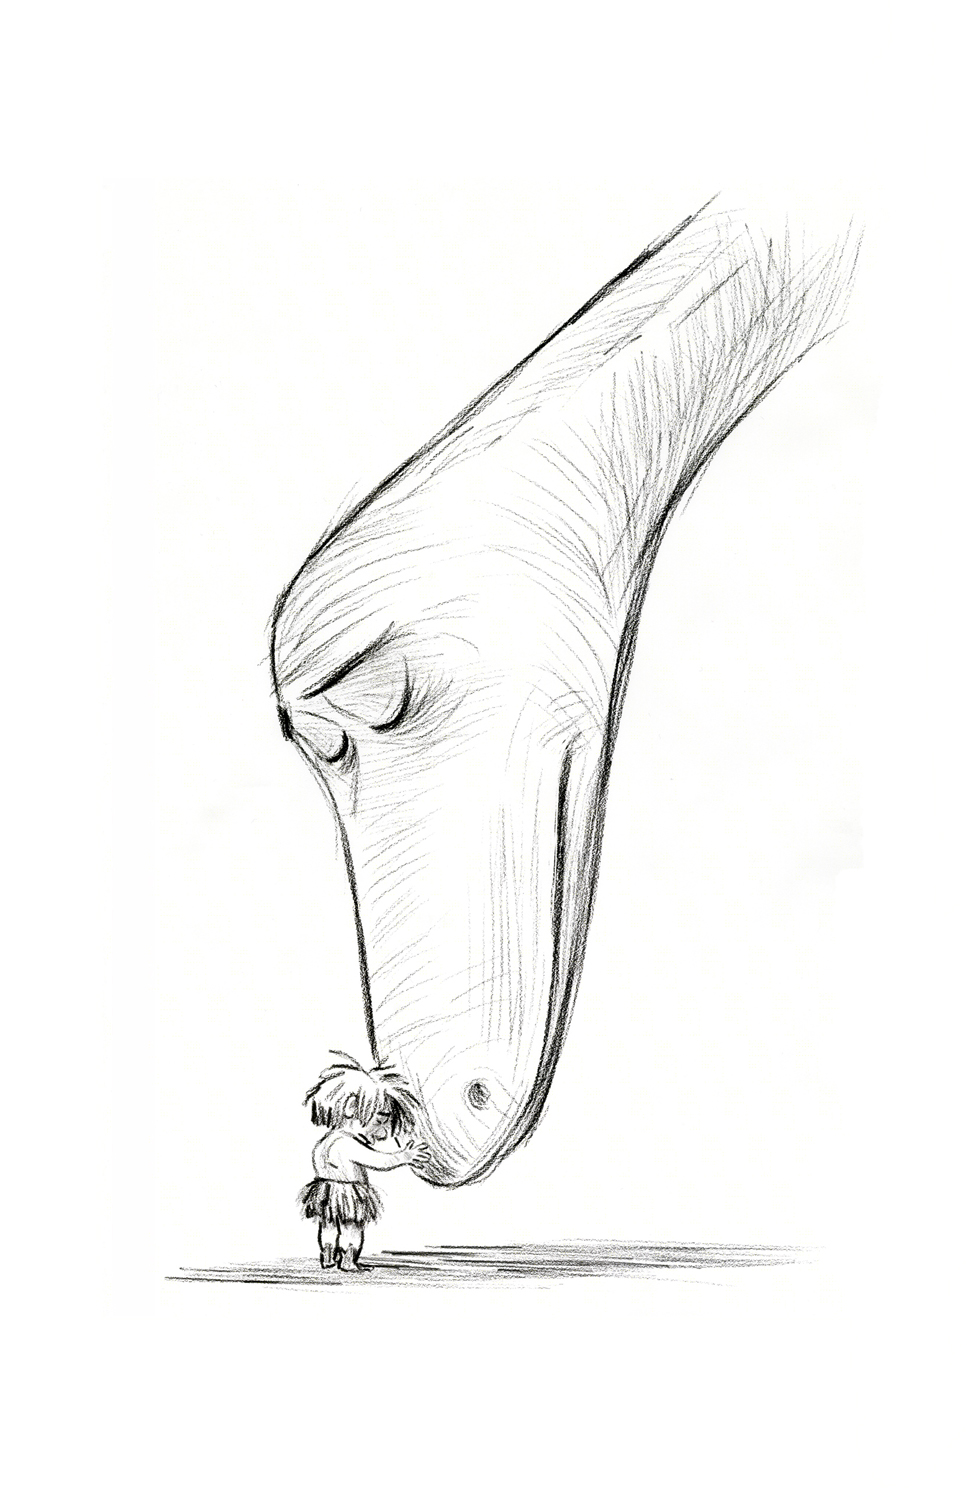 Peter Sohn
Spot and Arlo
The Good Dinosaur, 2015
Reproduction of pencil on paper
ⓒDisney/Pixar
